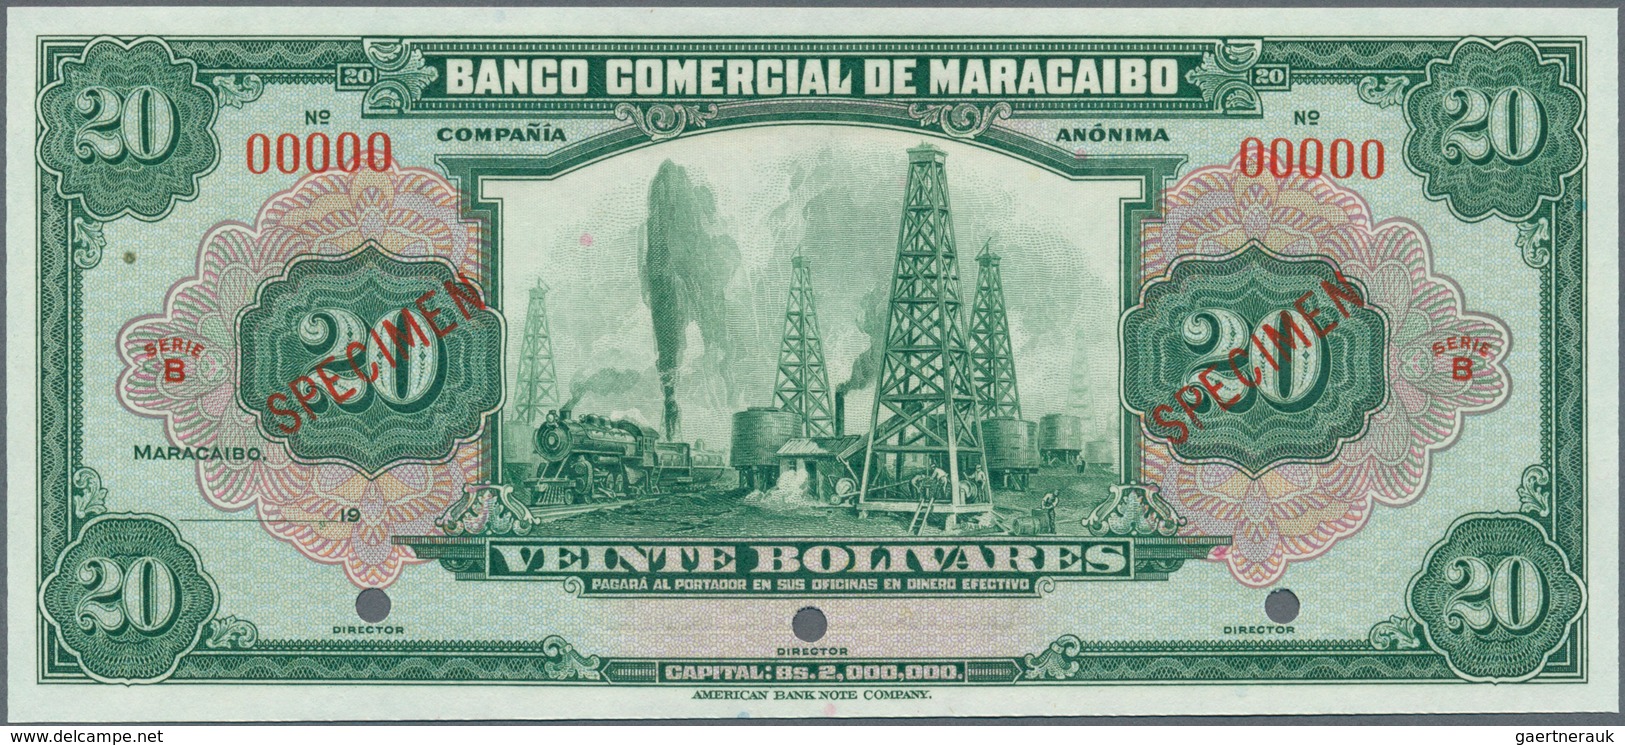 02608 Venezuela: Banco Comercial De Maracaibo 20 Bolivares Specimen Without Signatures And Date (1933-34), - Venezuela